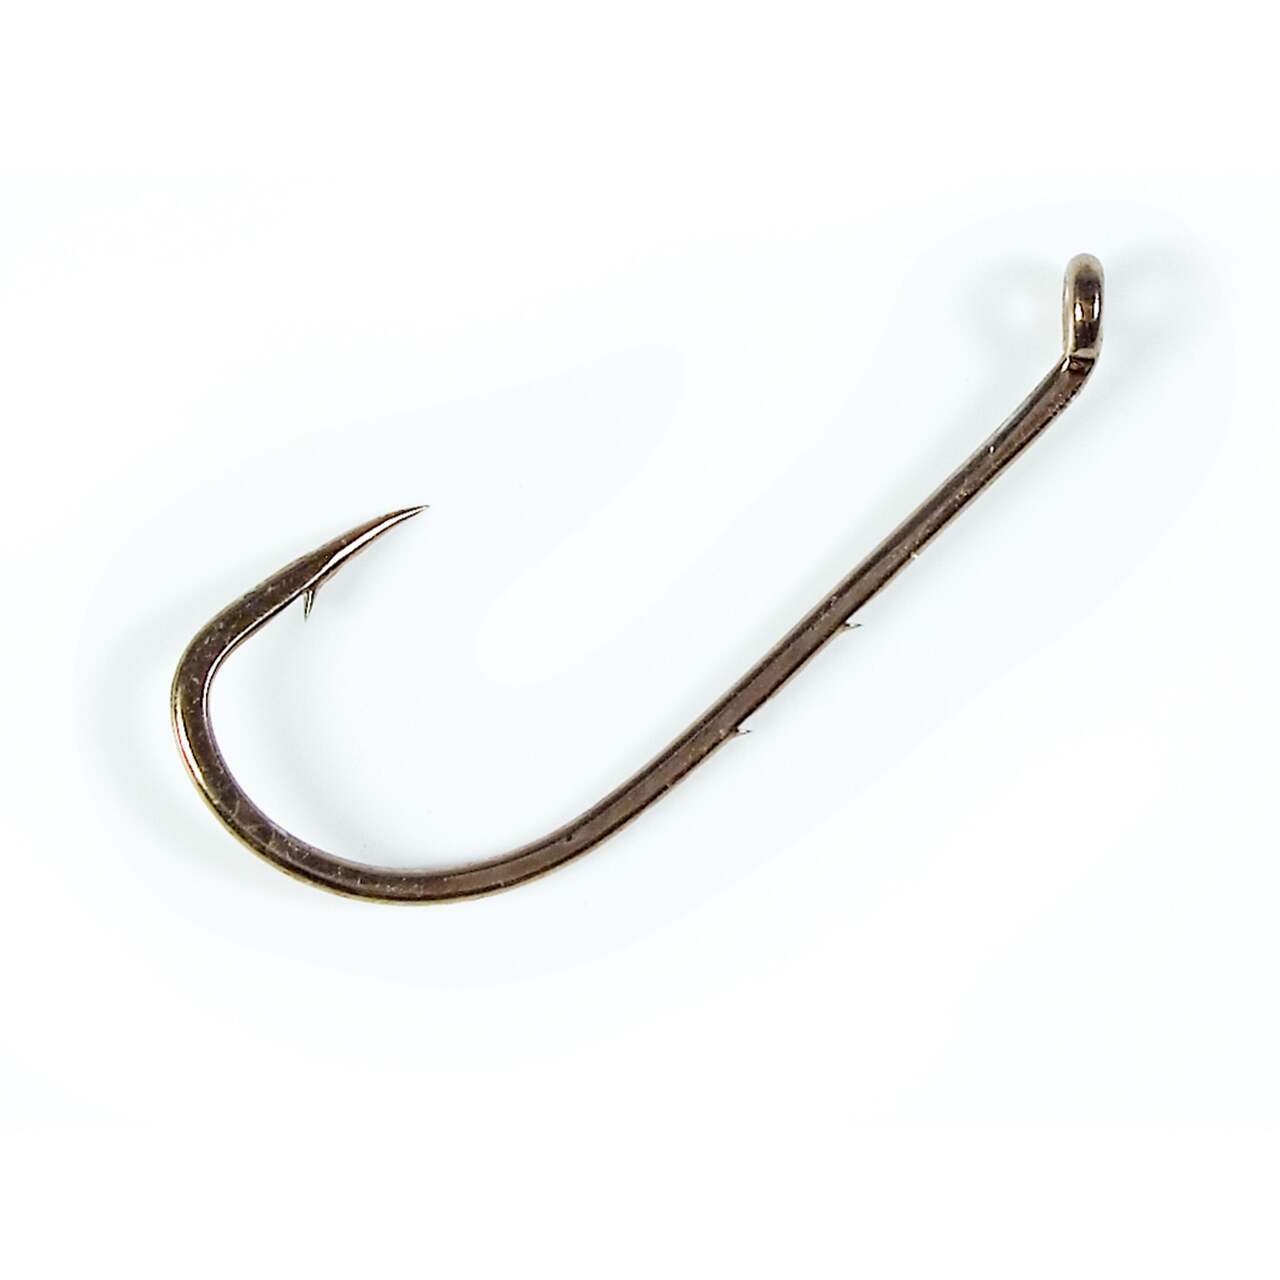 Gamakatsu Bait Holder Hook, Bronze